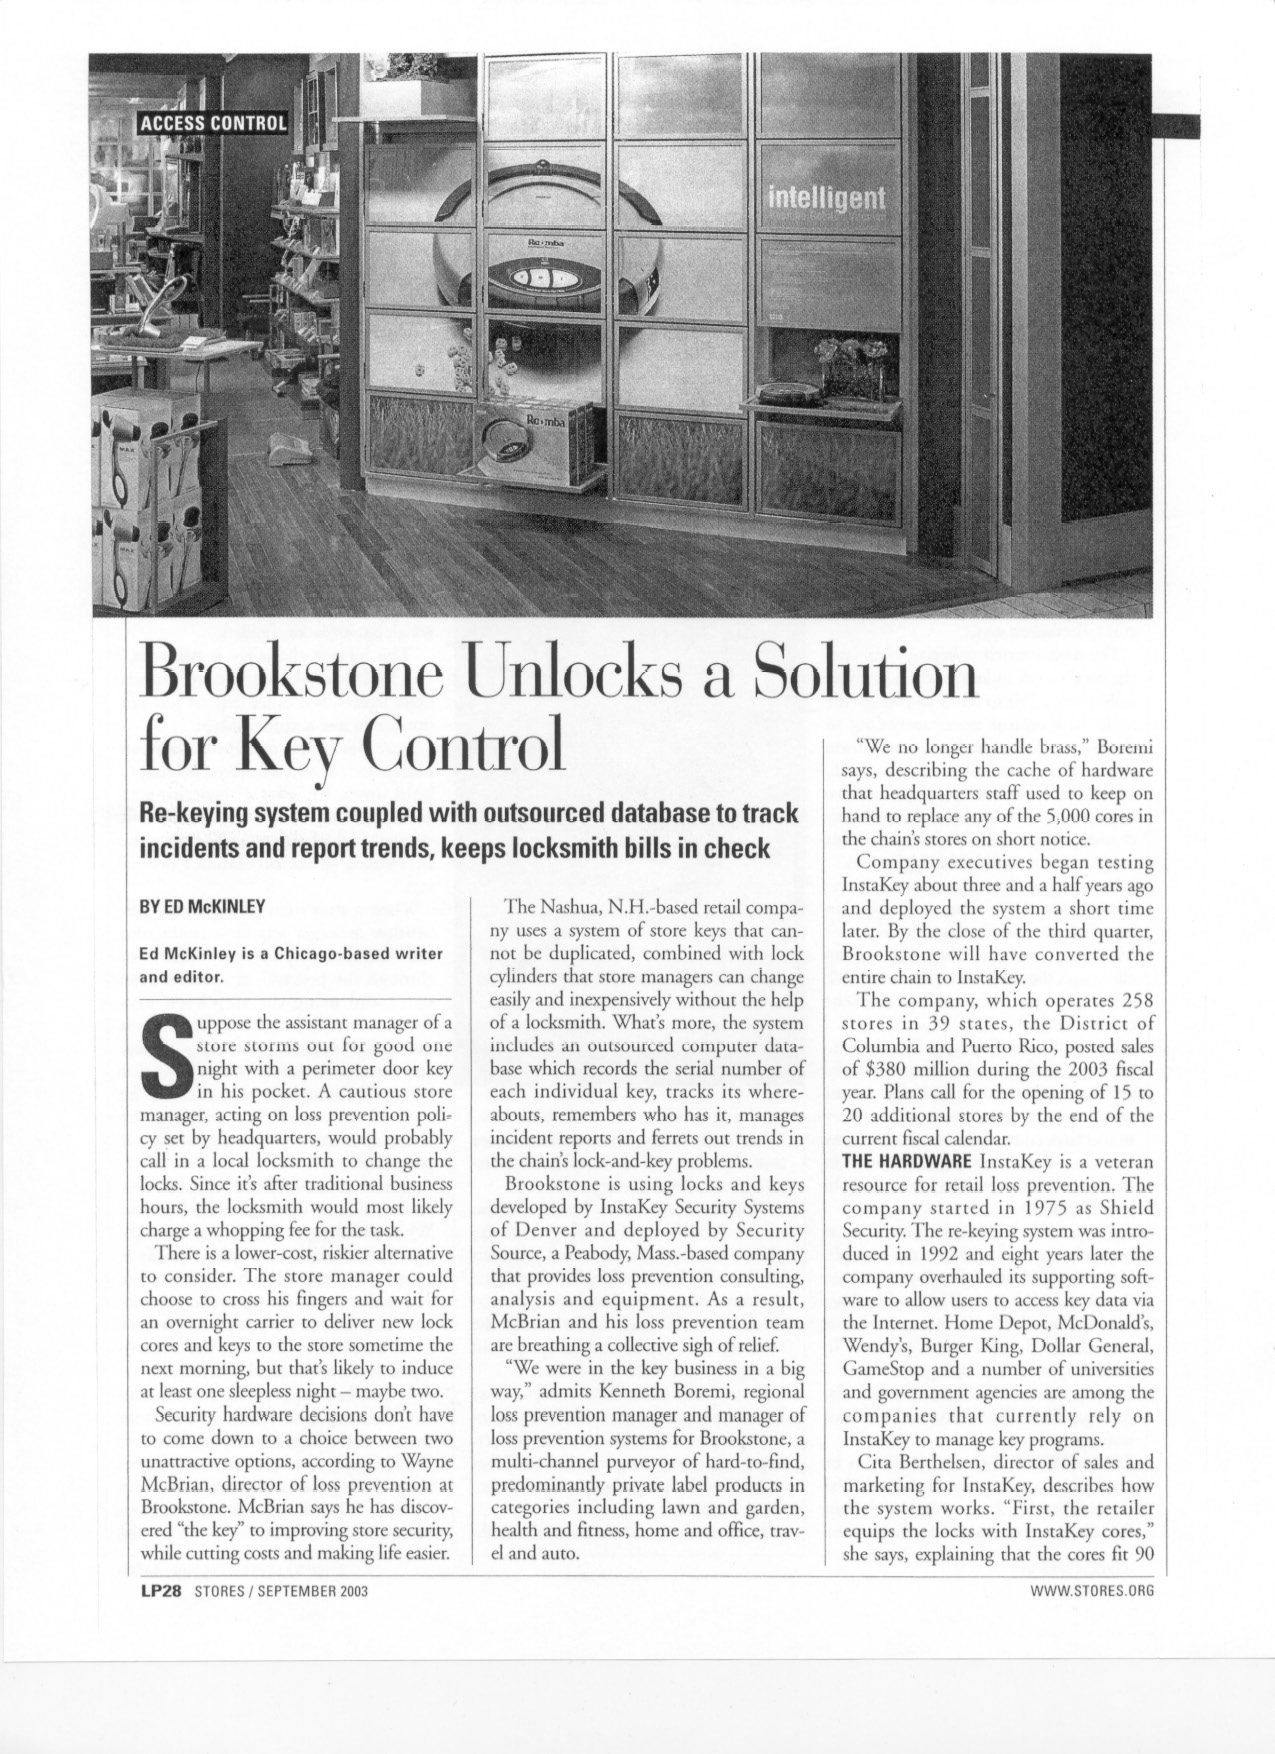 Brookstone Unlocks a Solution for Key Control